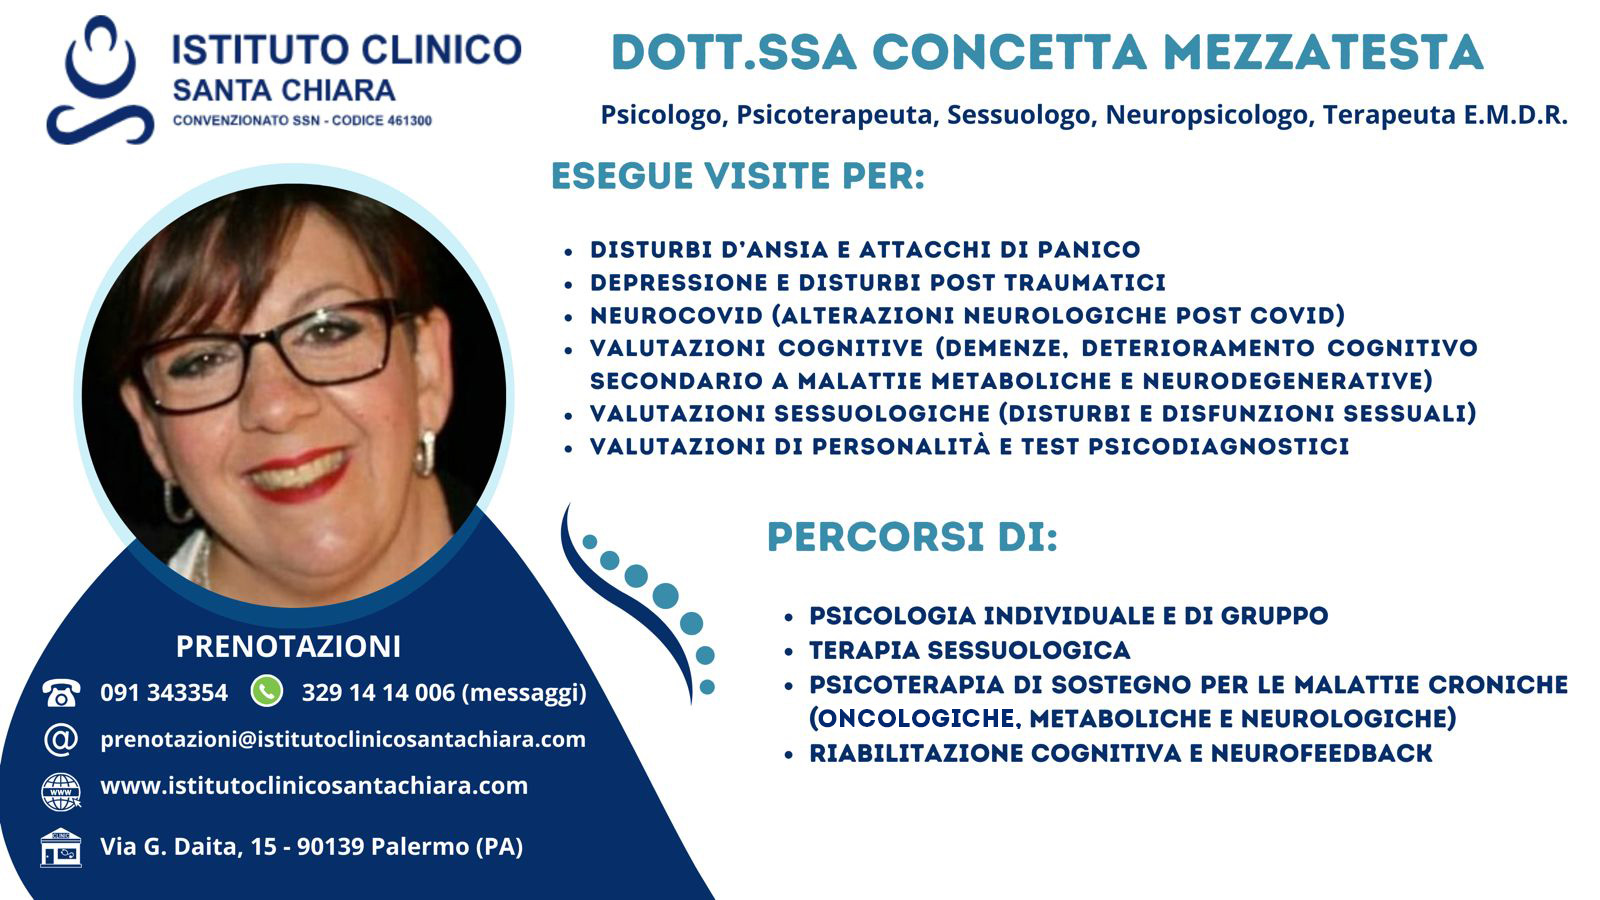 Dott.ssa Concetta Mezzatesta